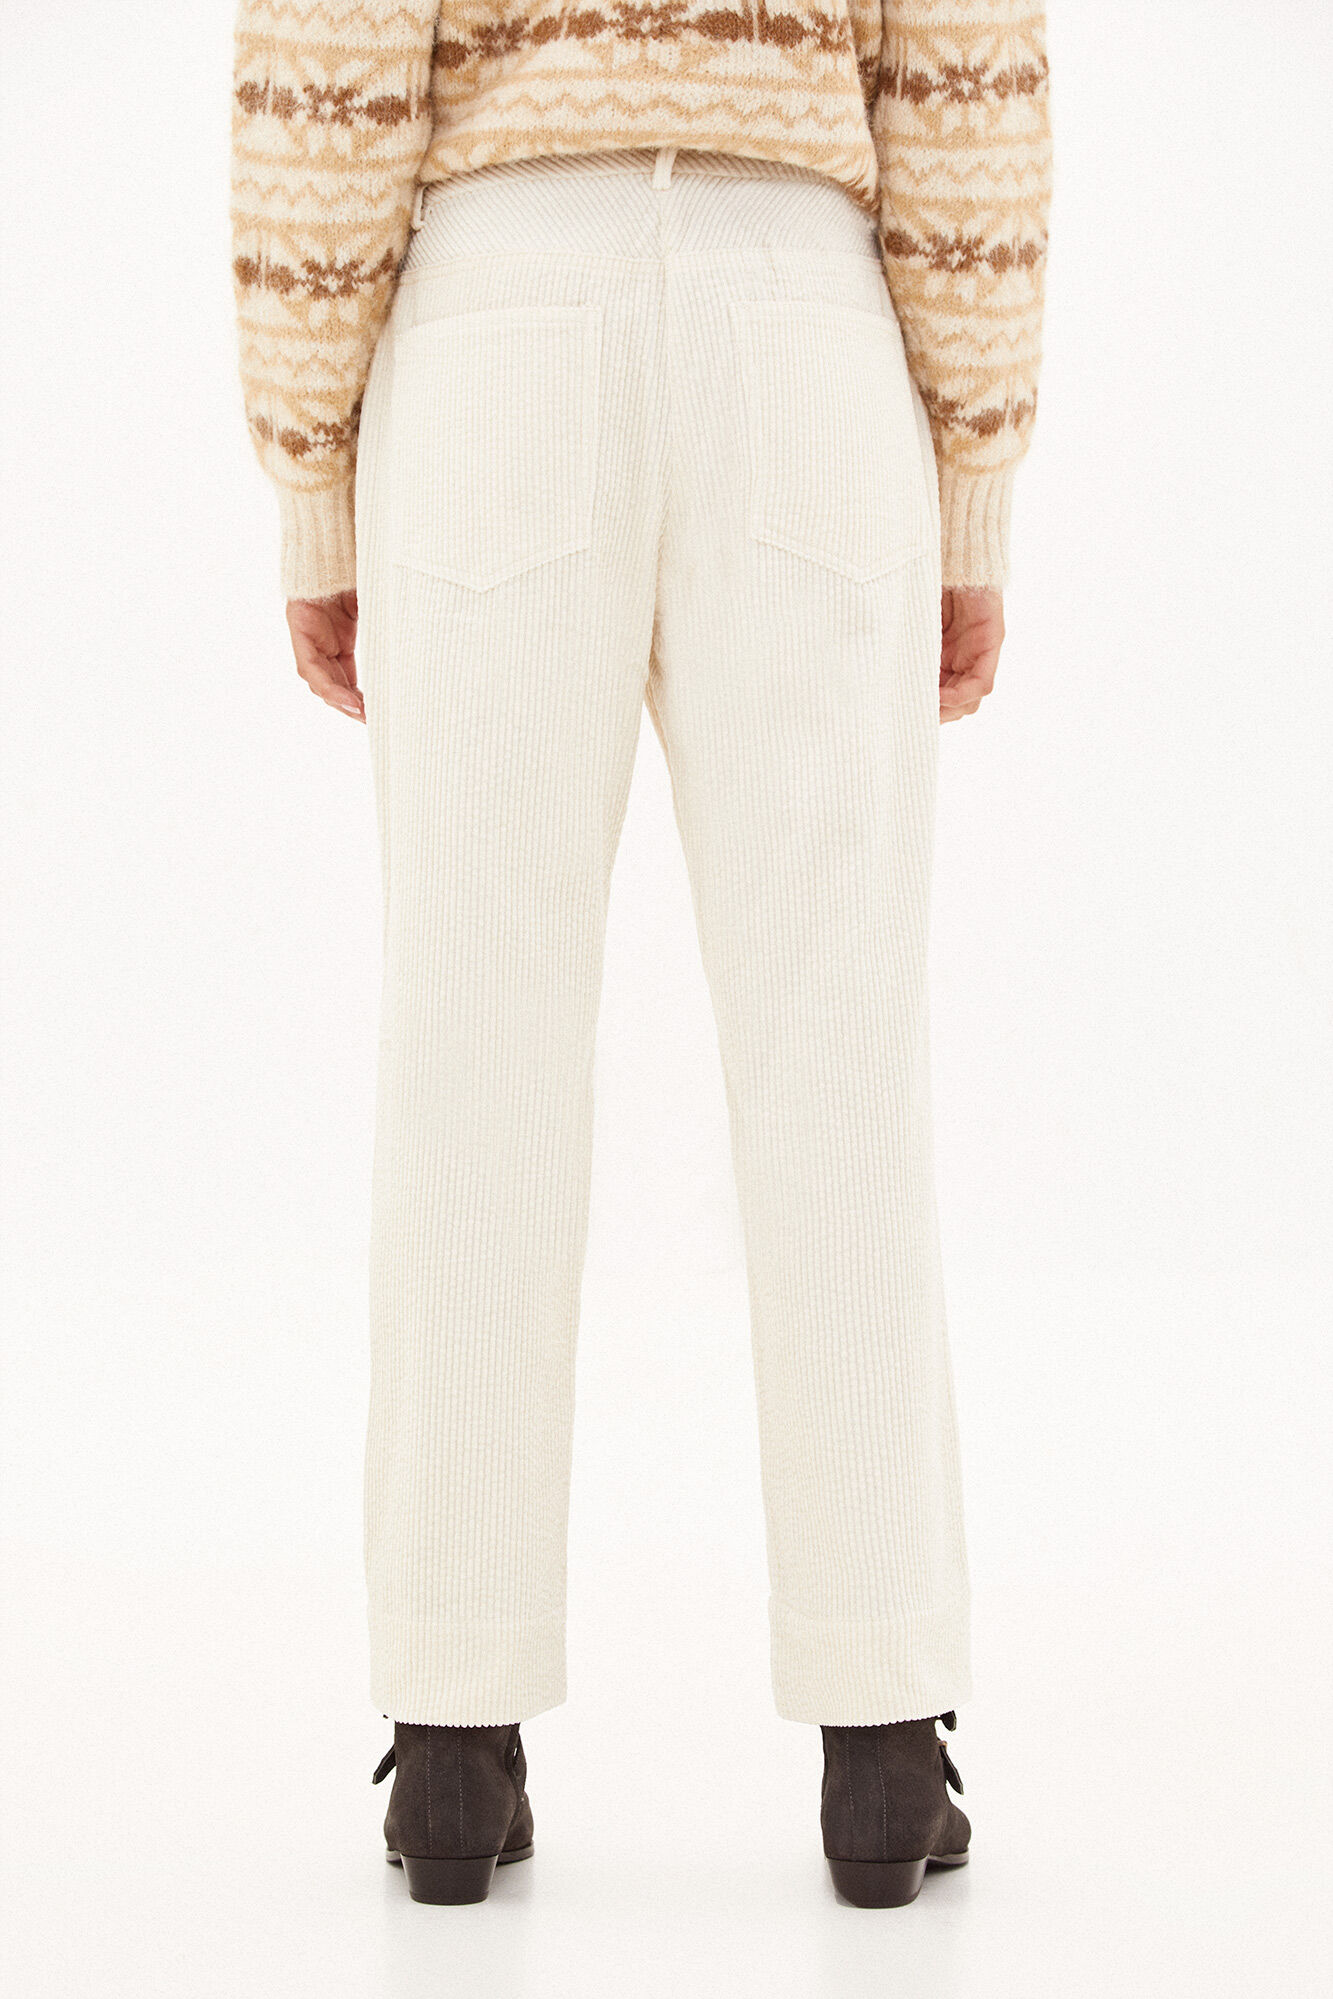 White Corduroy One Pleat Trousers | Acquista su Barròco